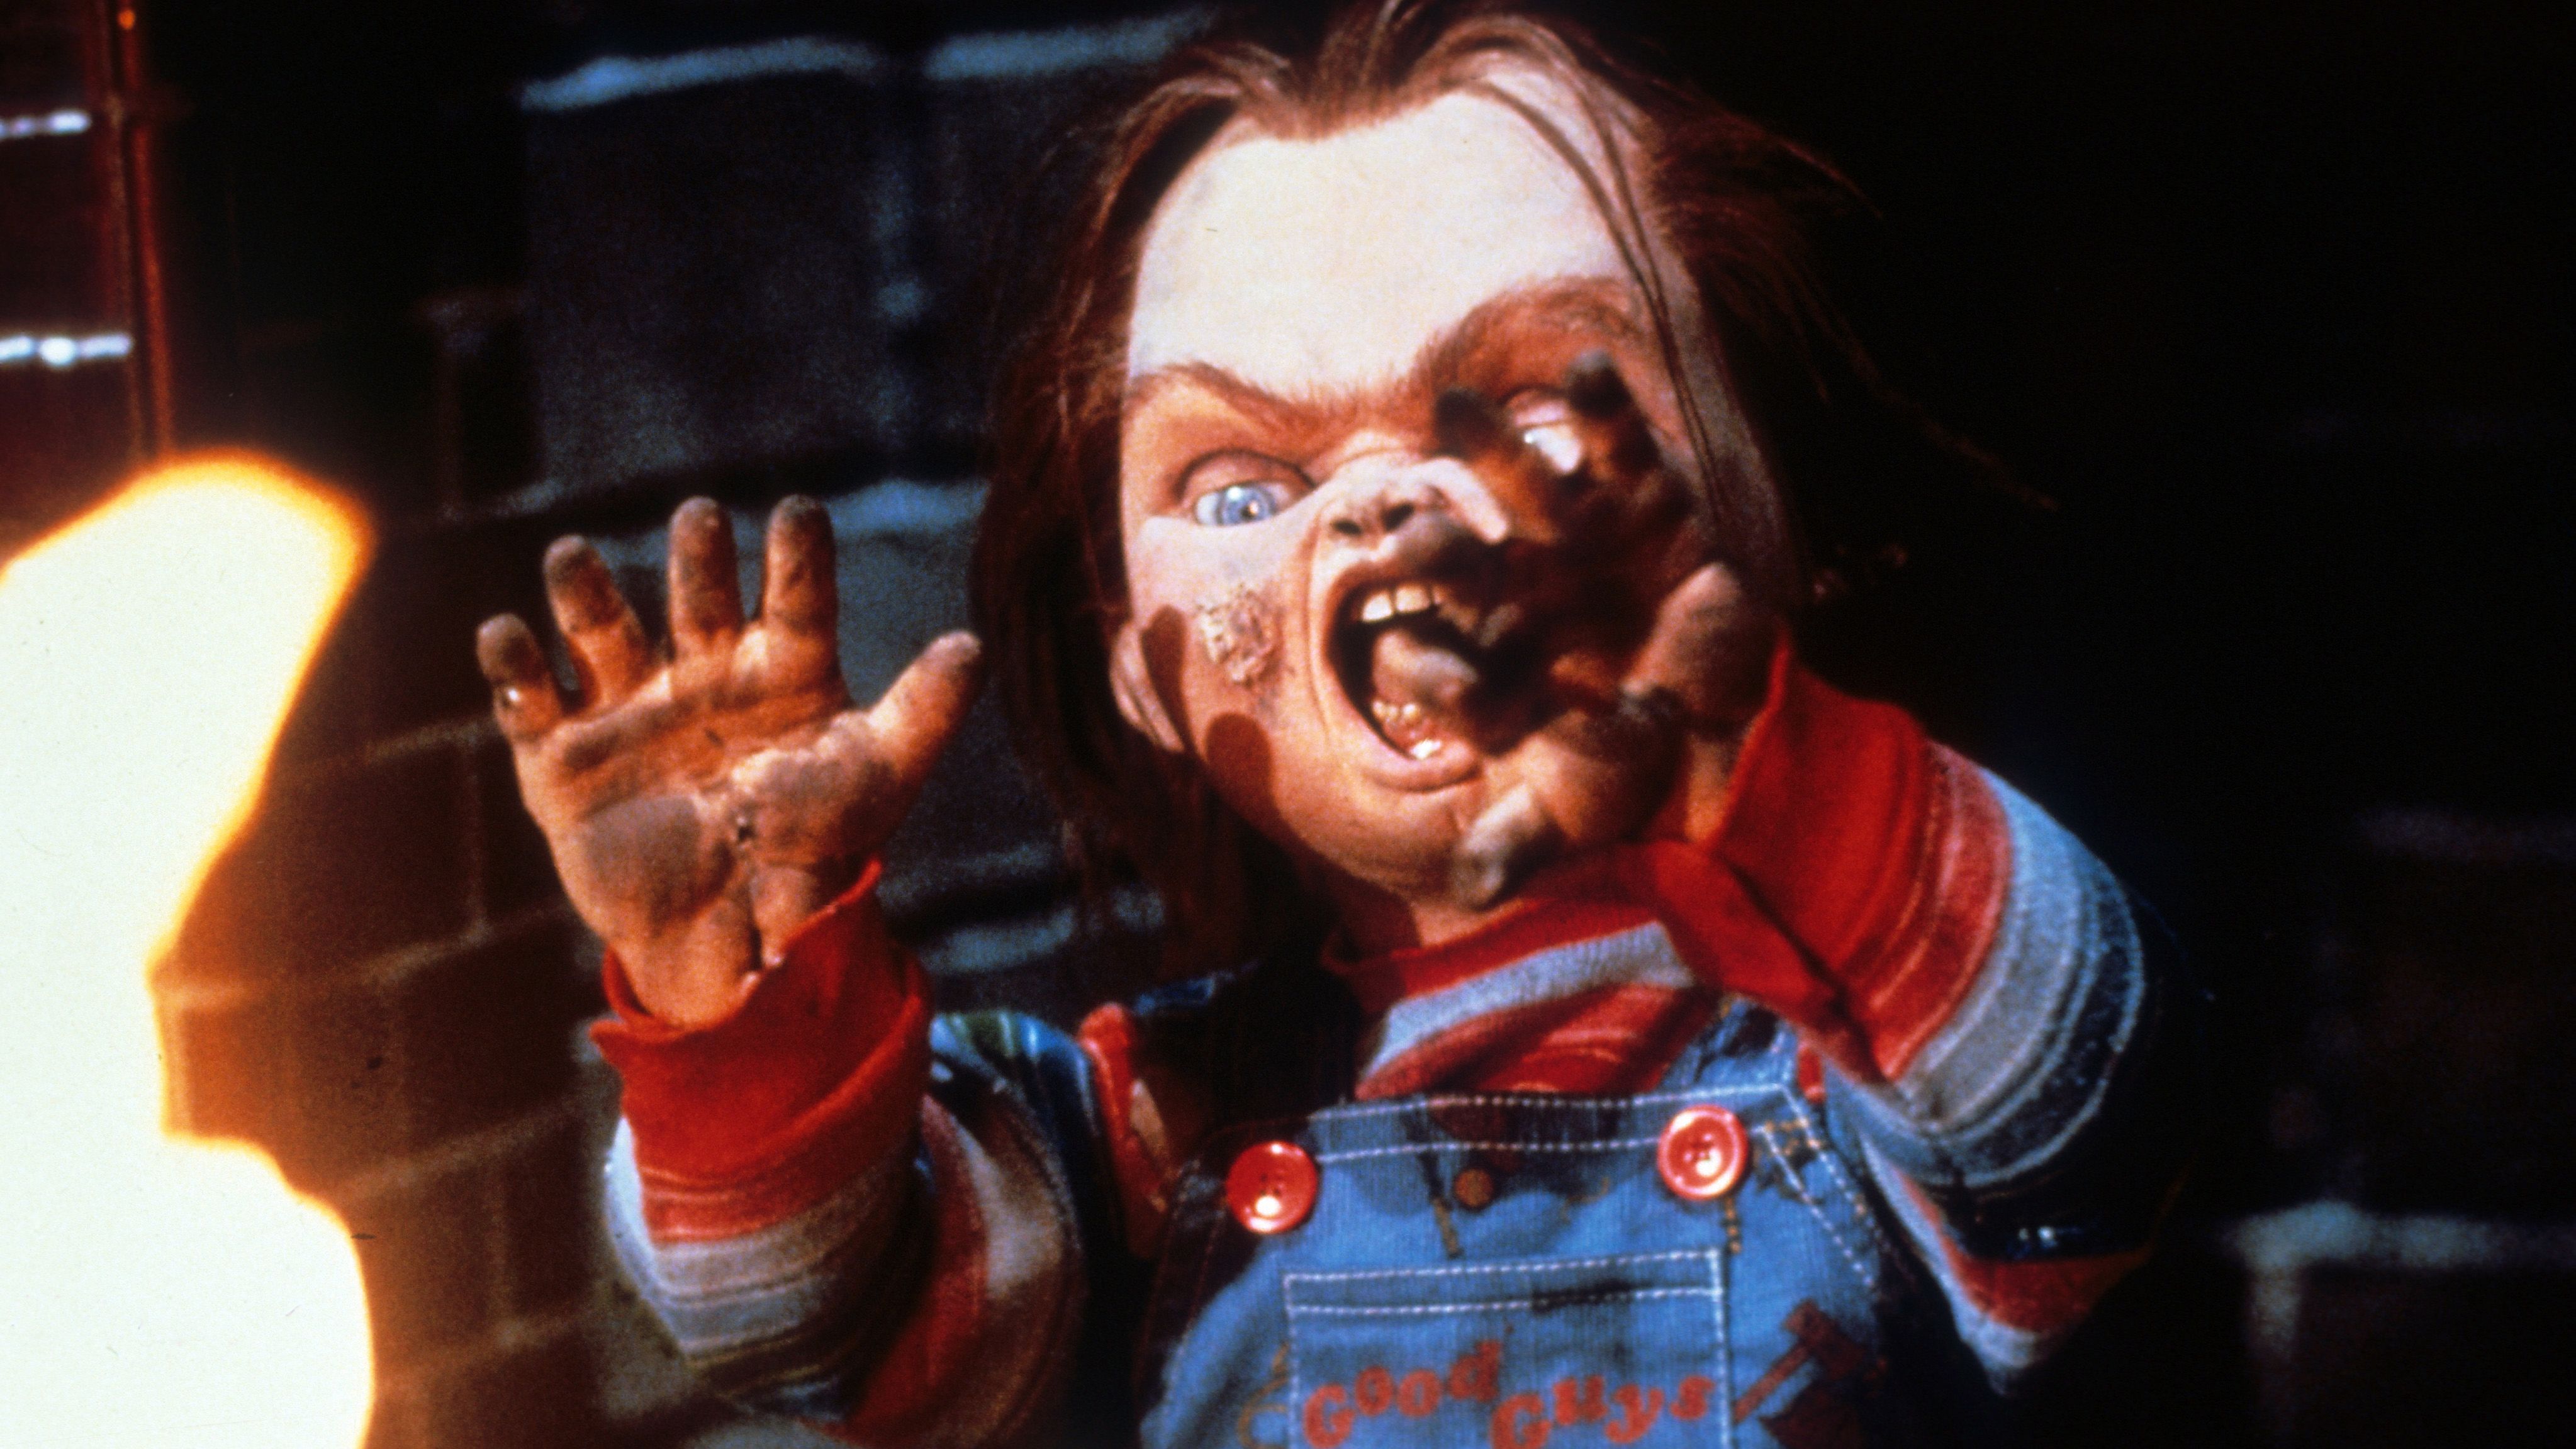 Living with Chucky (2022) - IMDb